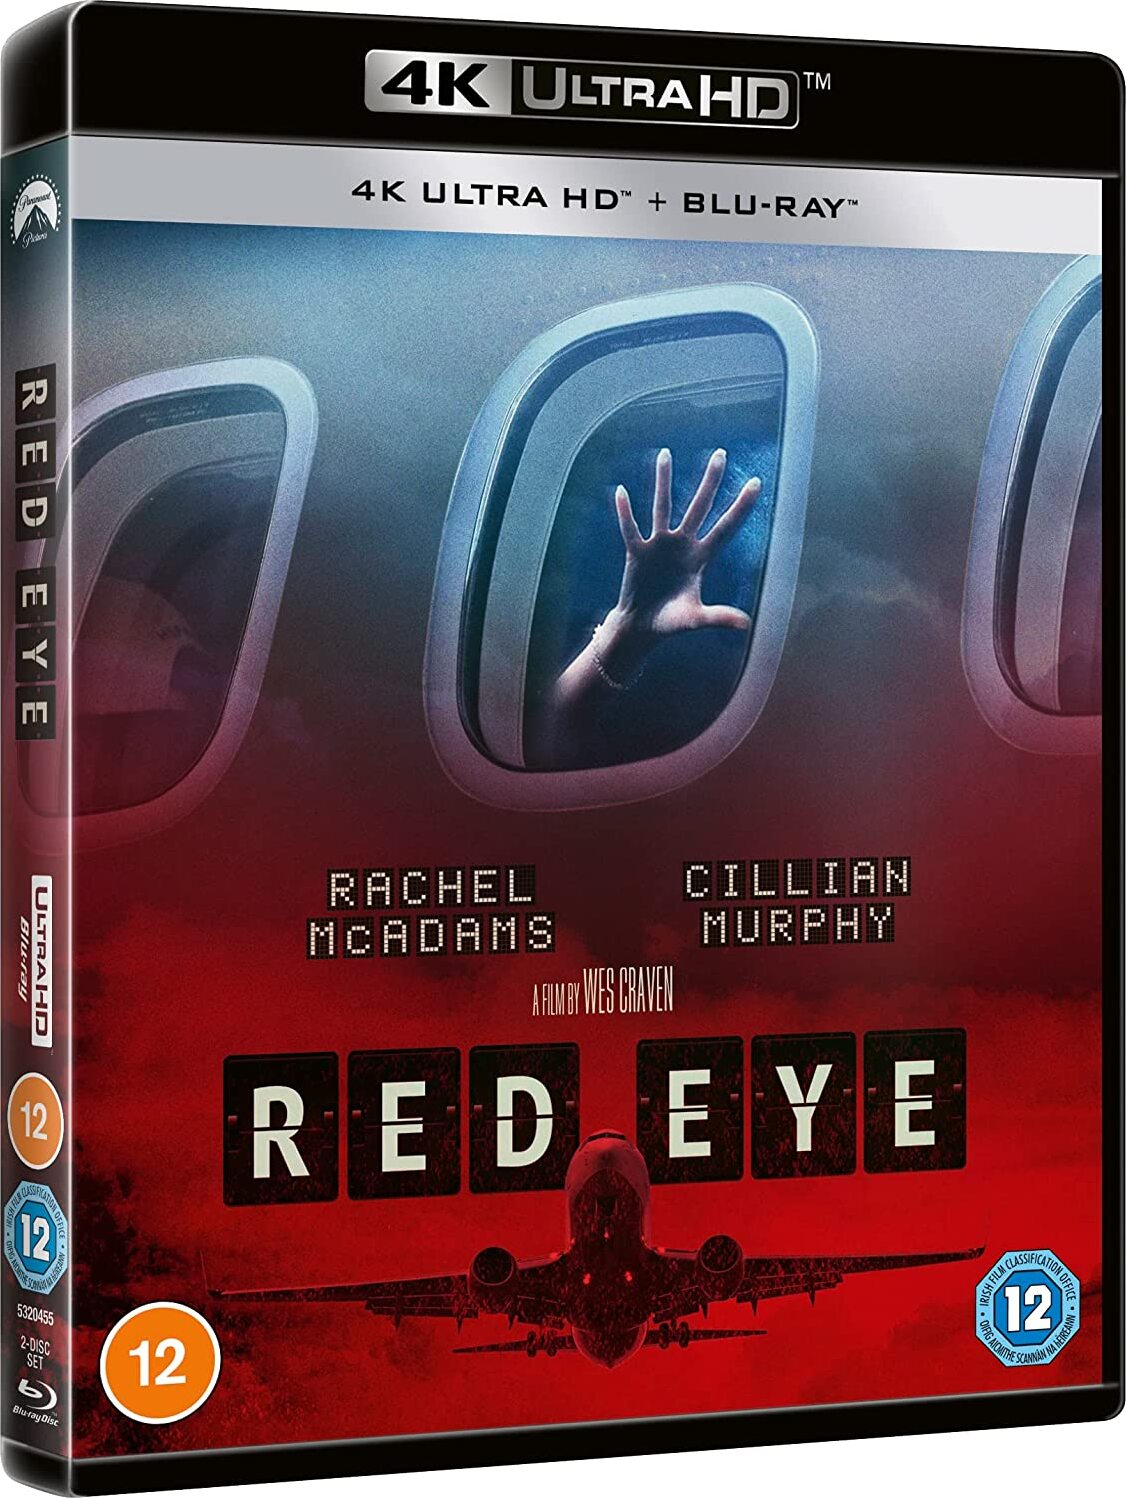 Red Eye [4K UHD] [UK]